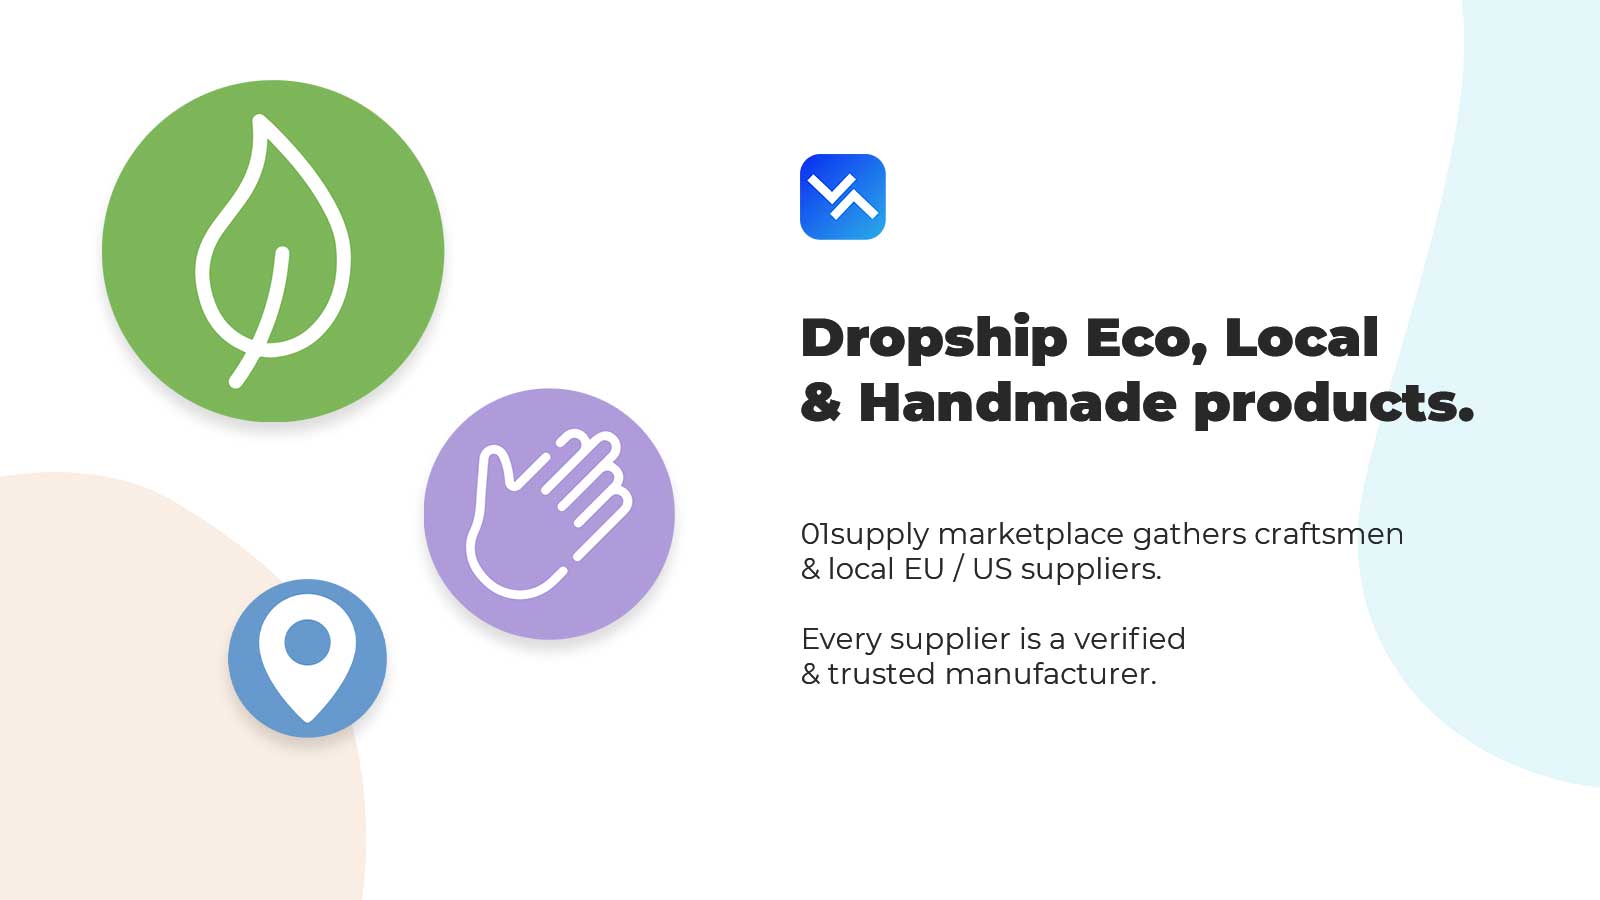 01supply ‑ Dropship Suppliers Screenshot